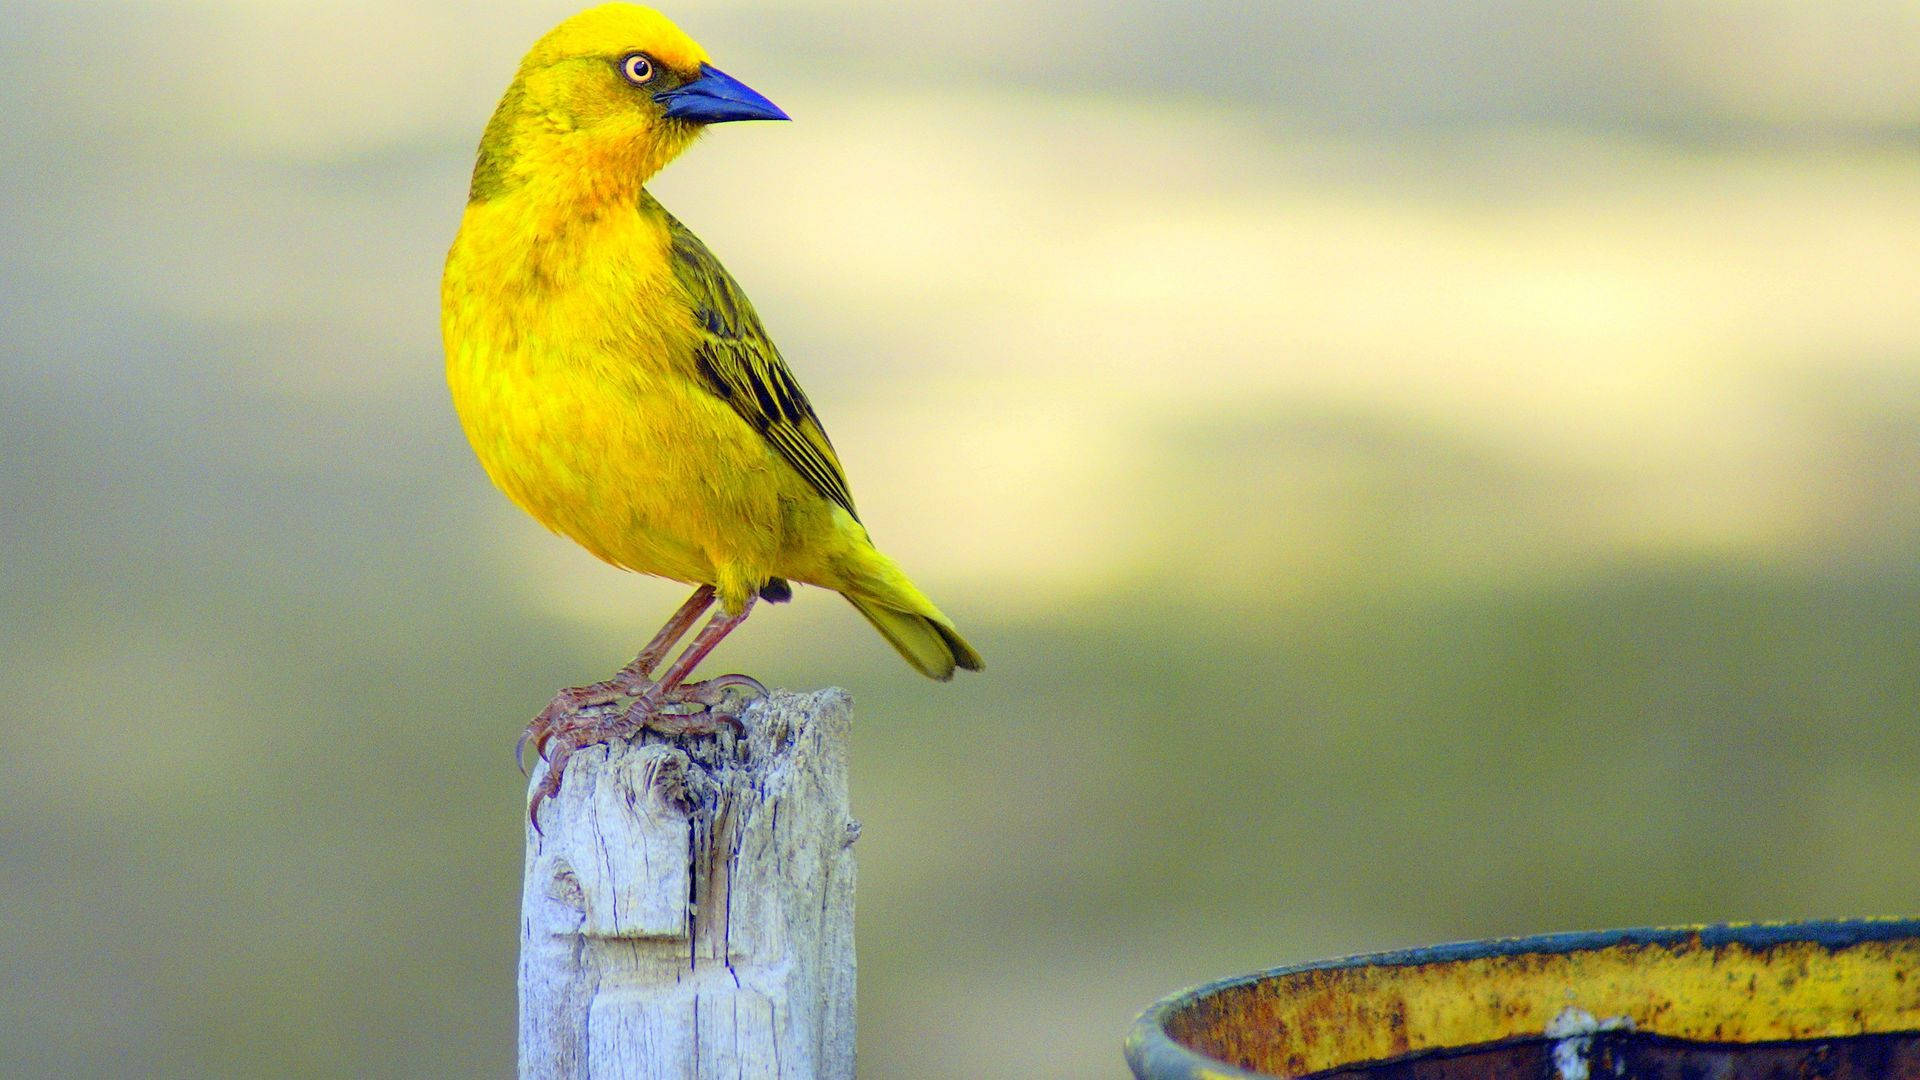 Vibrant Yellow Bird with Blue Beak Wallpaper